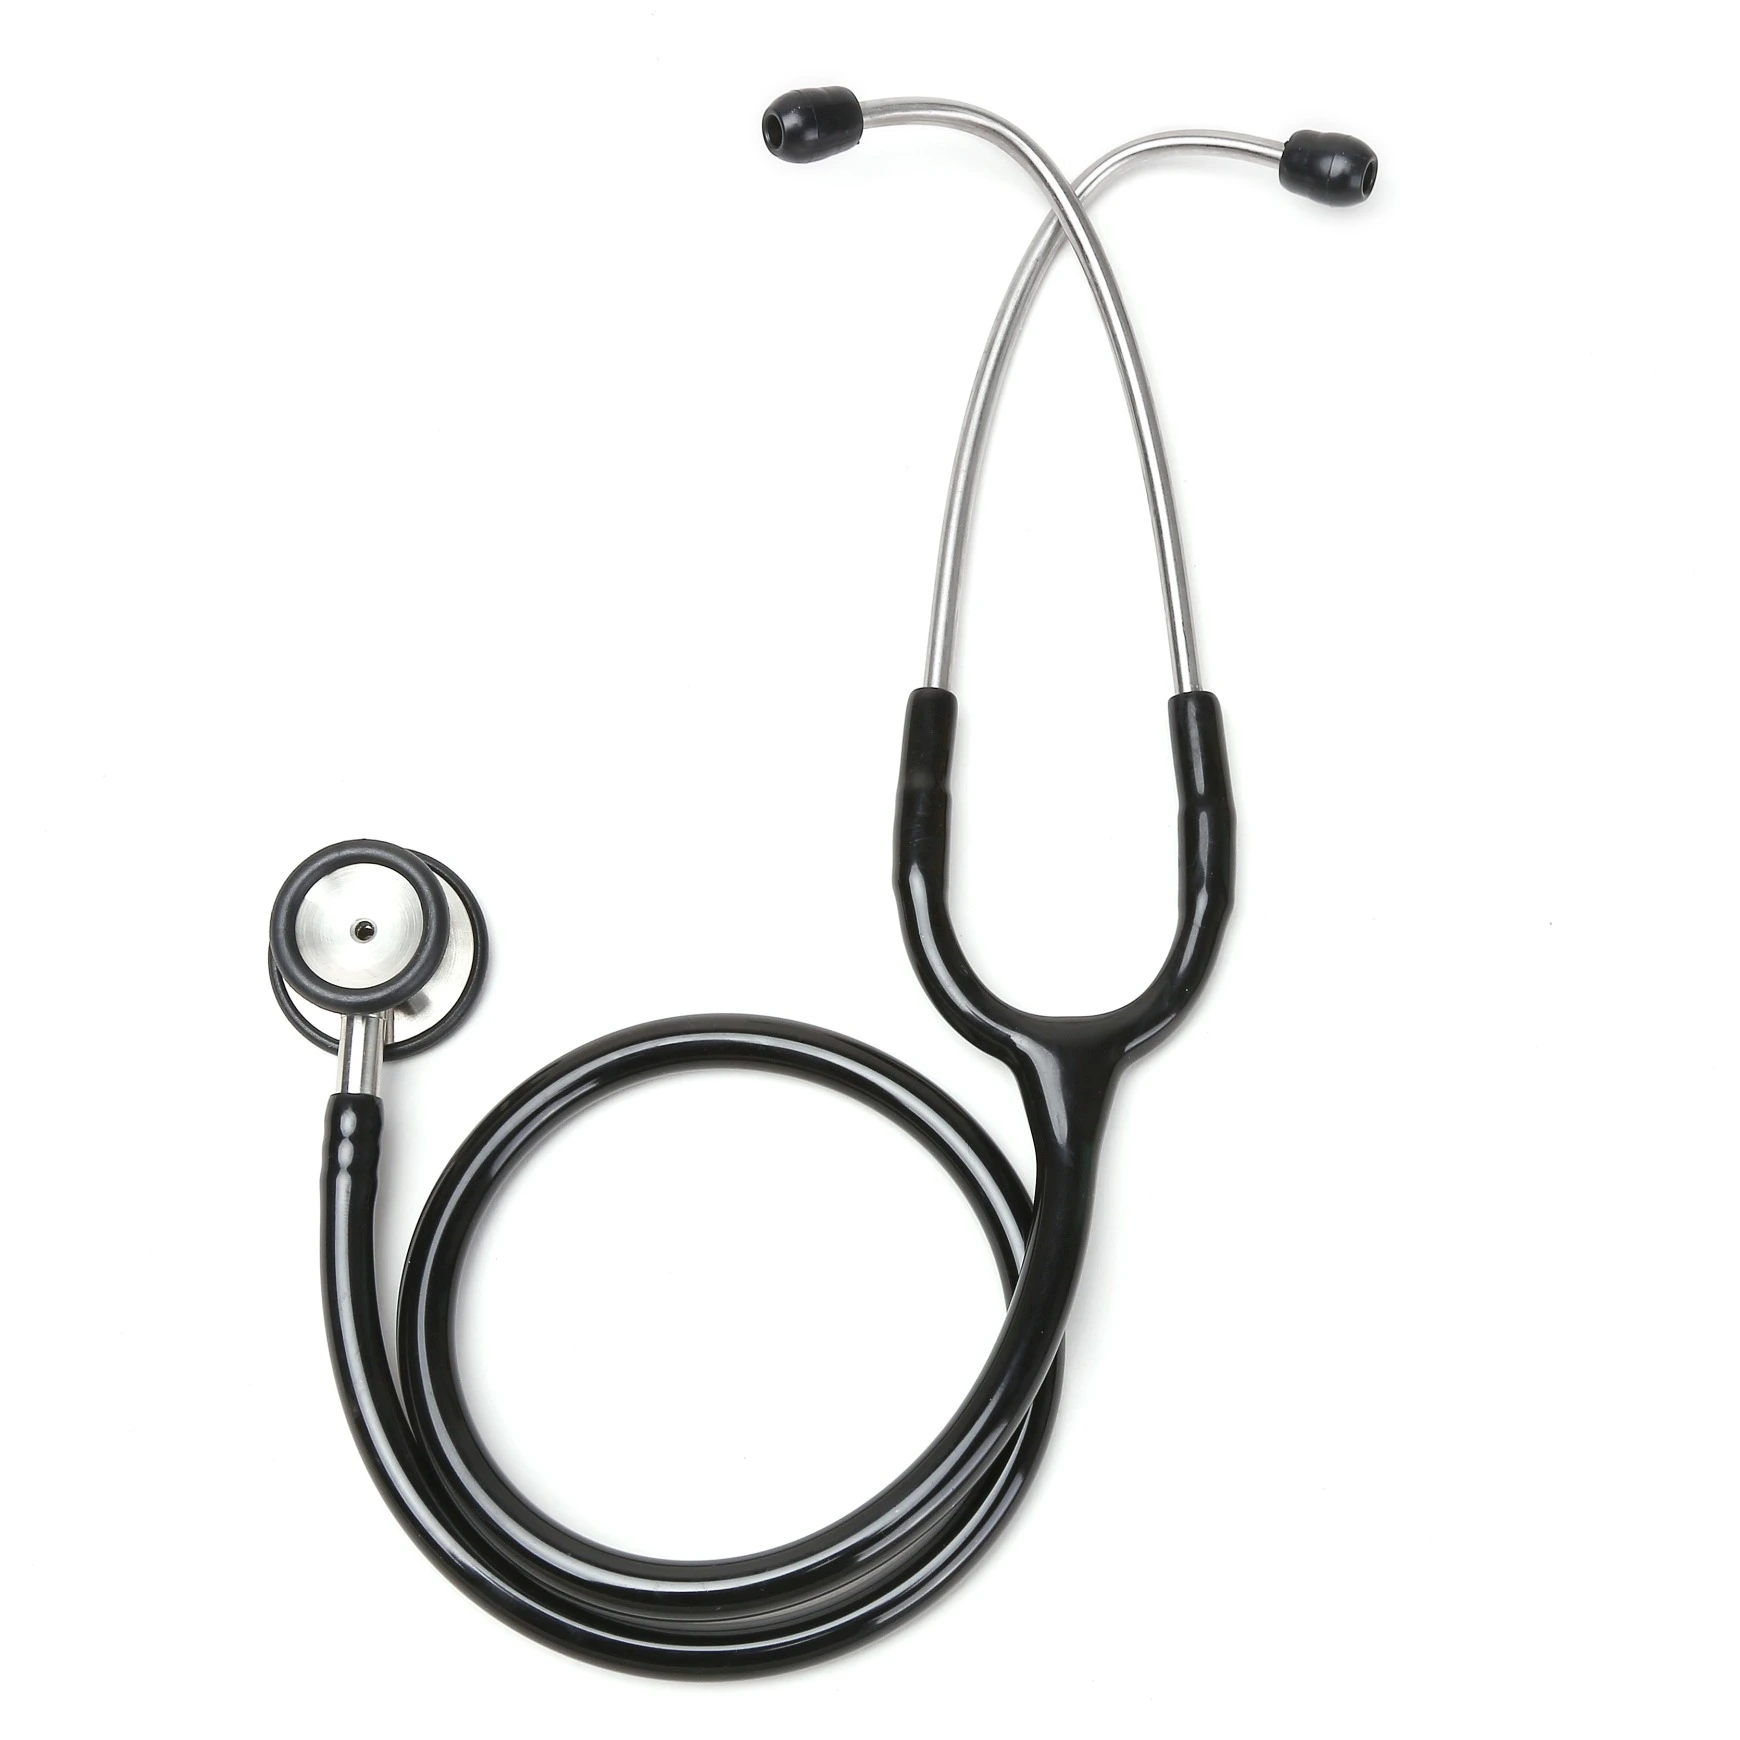 Stainless Steel Stethoscope Supplier